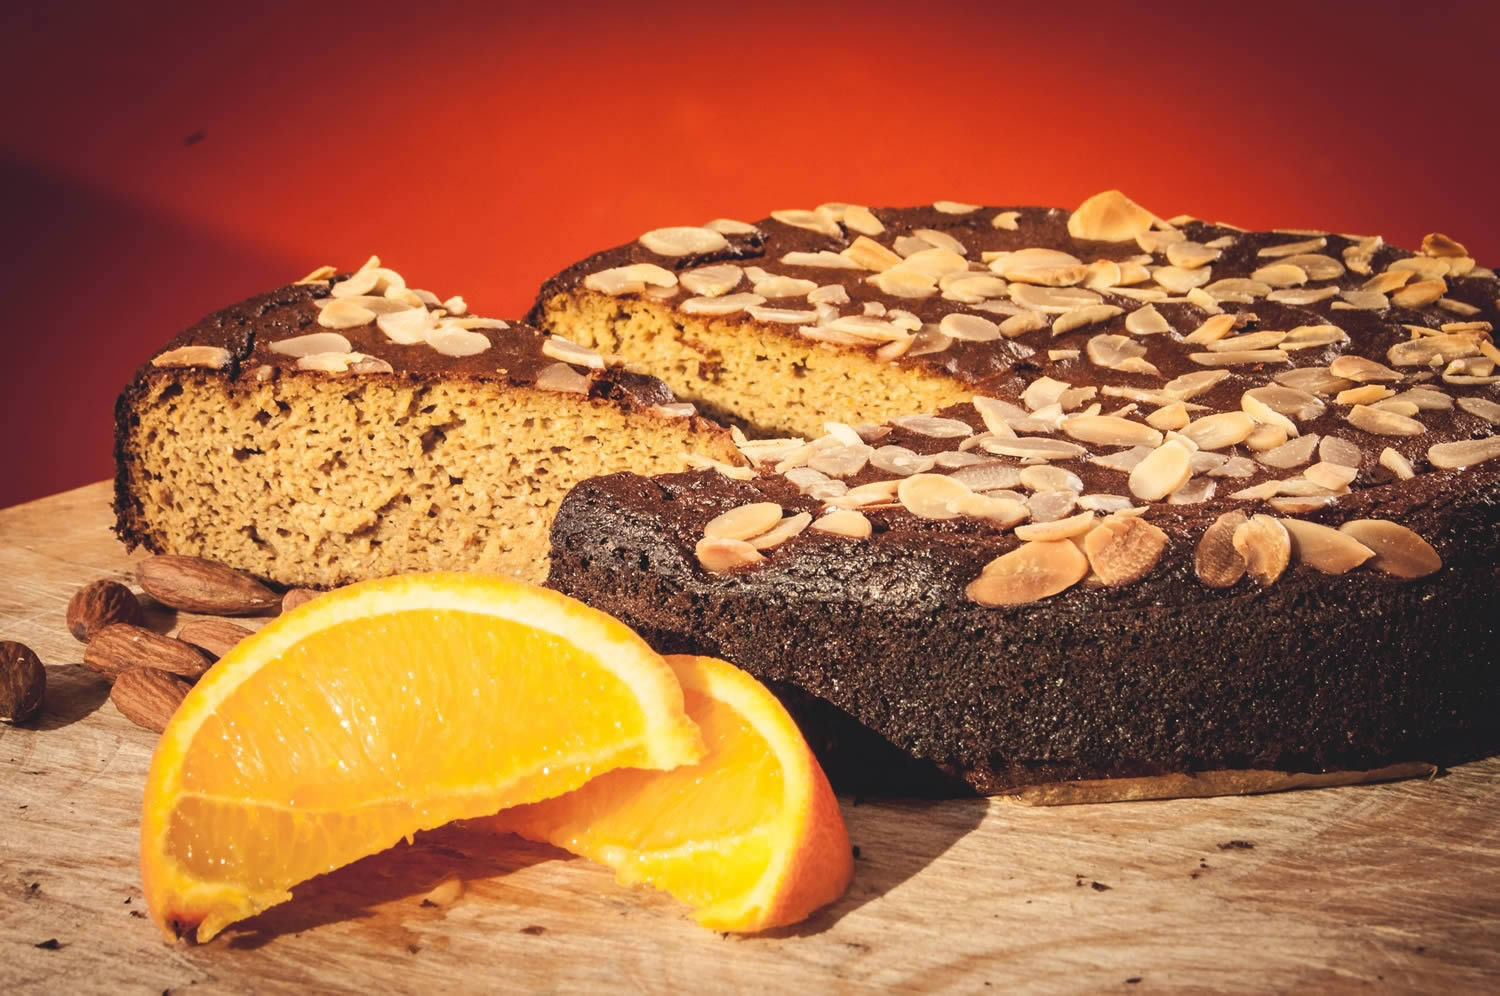 Orange and Almond Cake